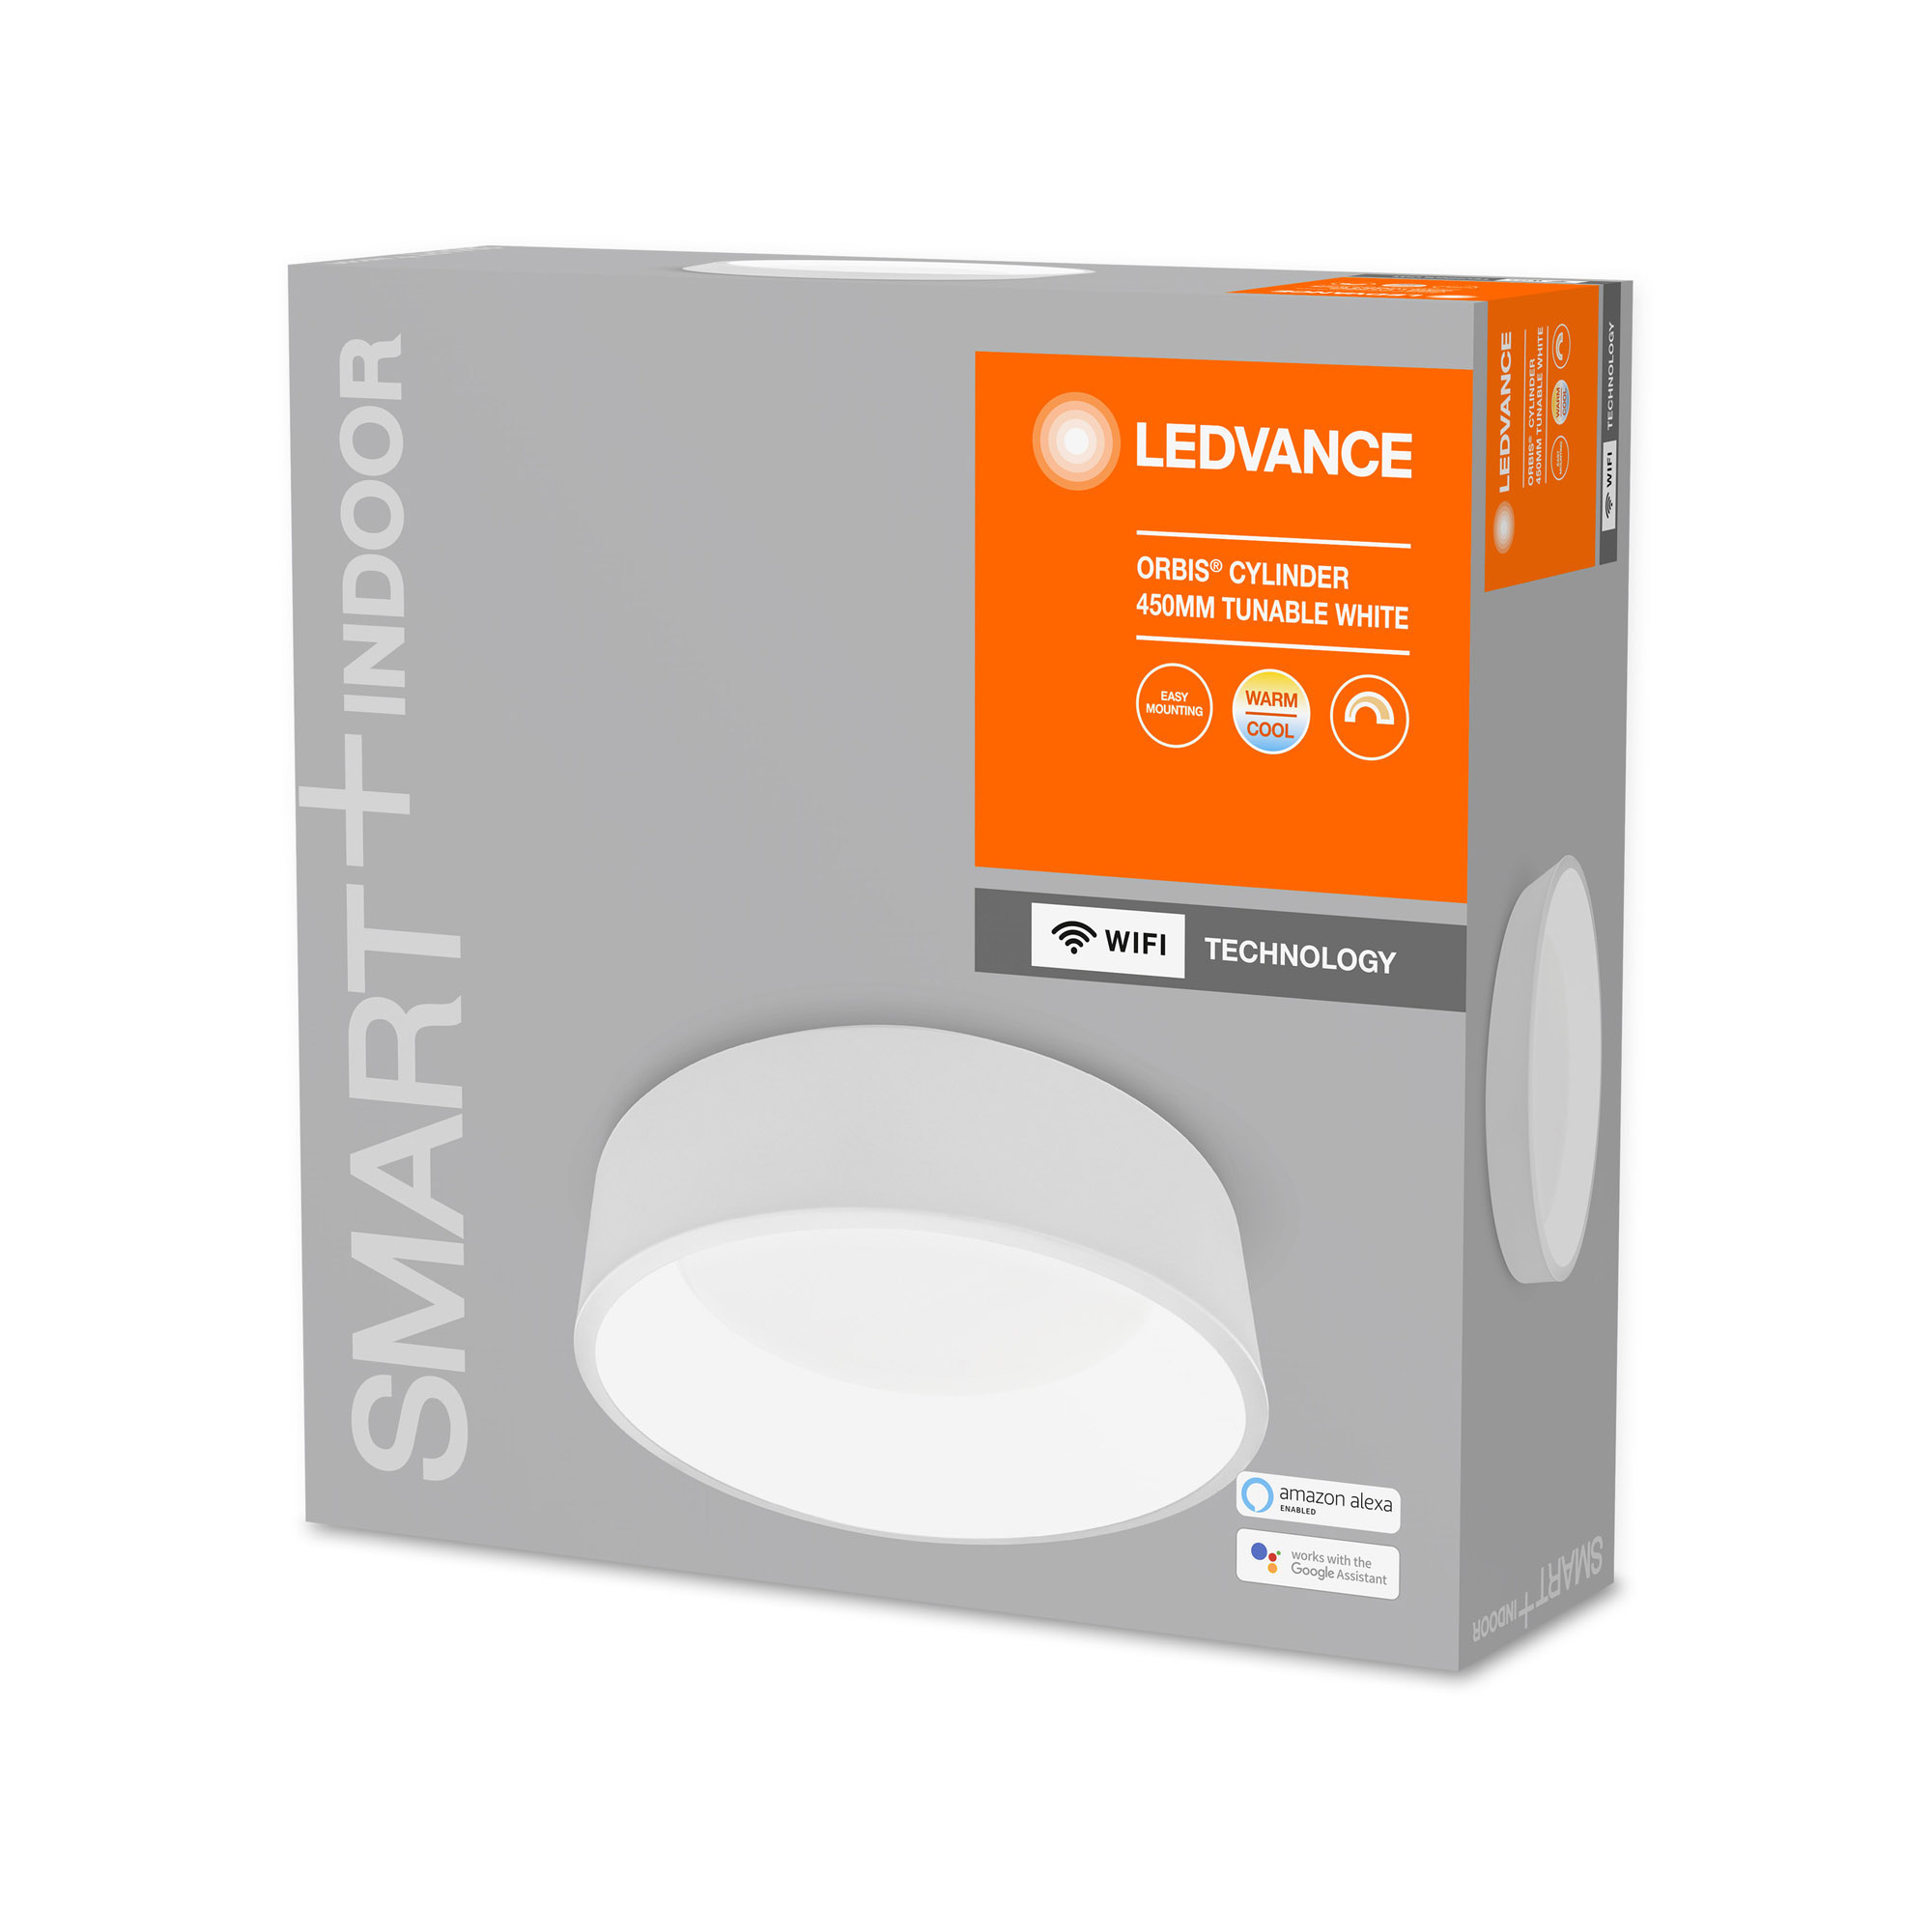 LEDVANCE SMART+ WiFi Tunable White LED Ceiling Light ORBIS Cylinder 450mm white 3300lm